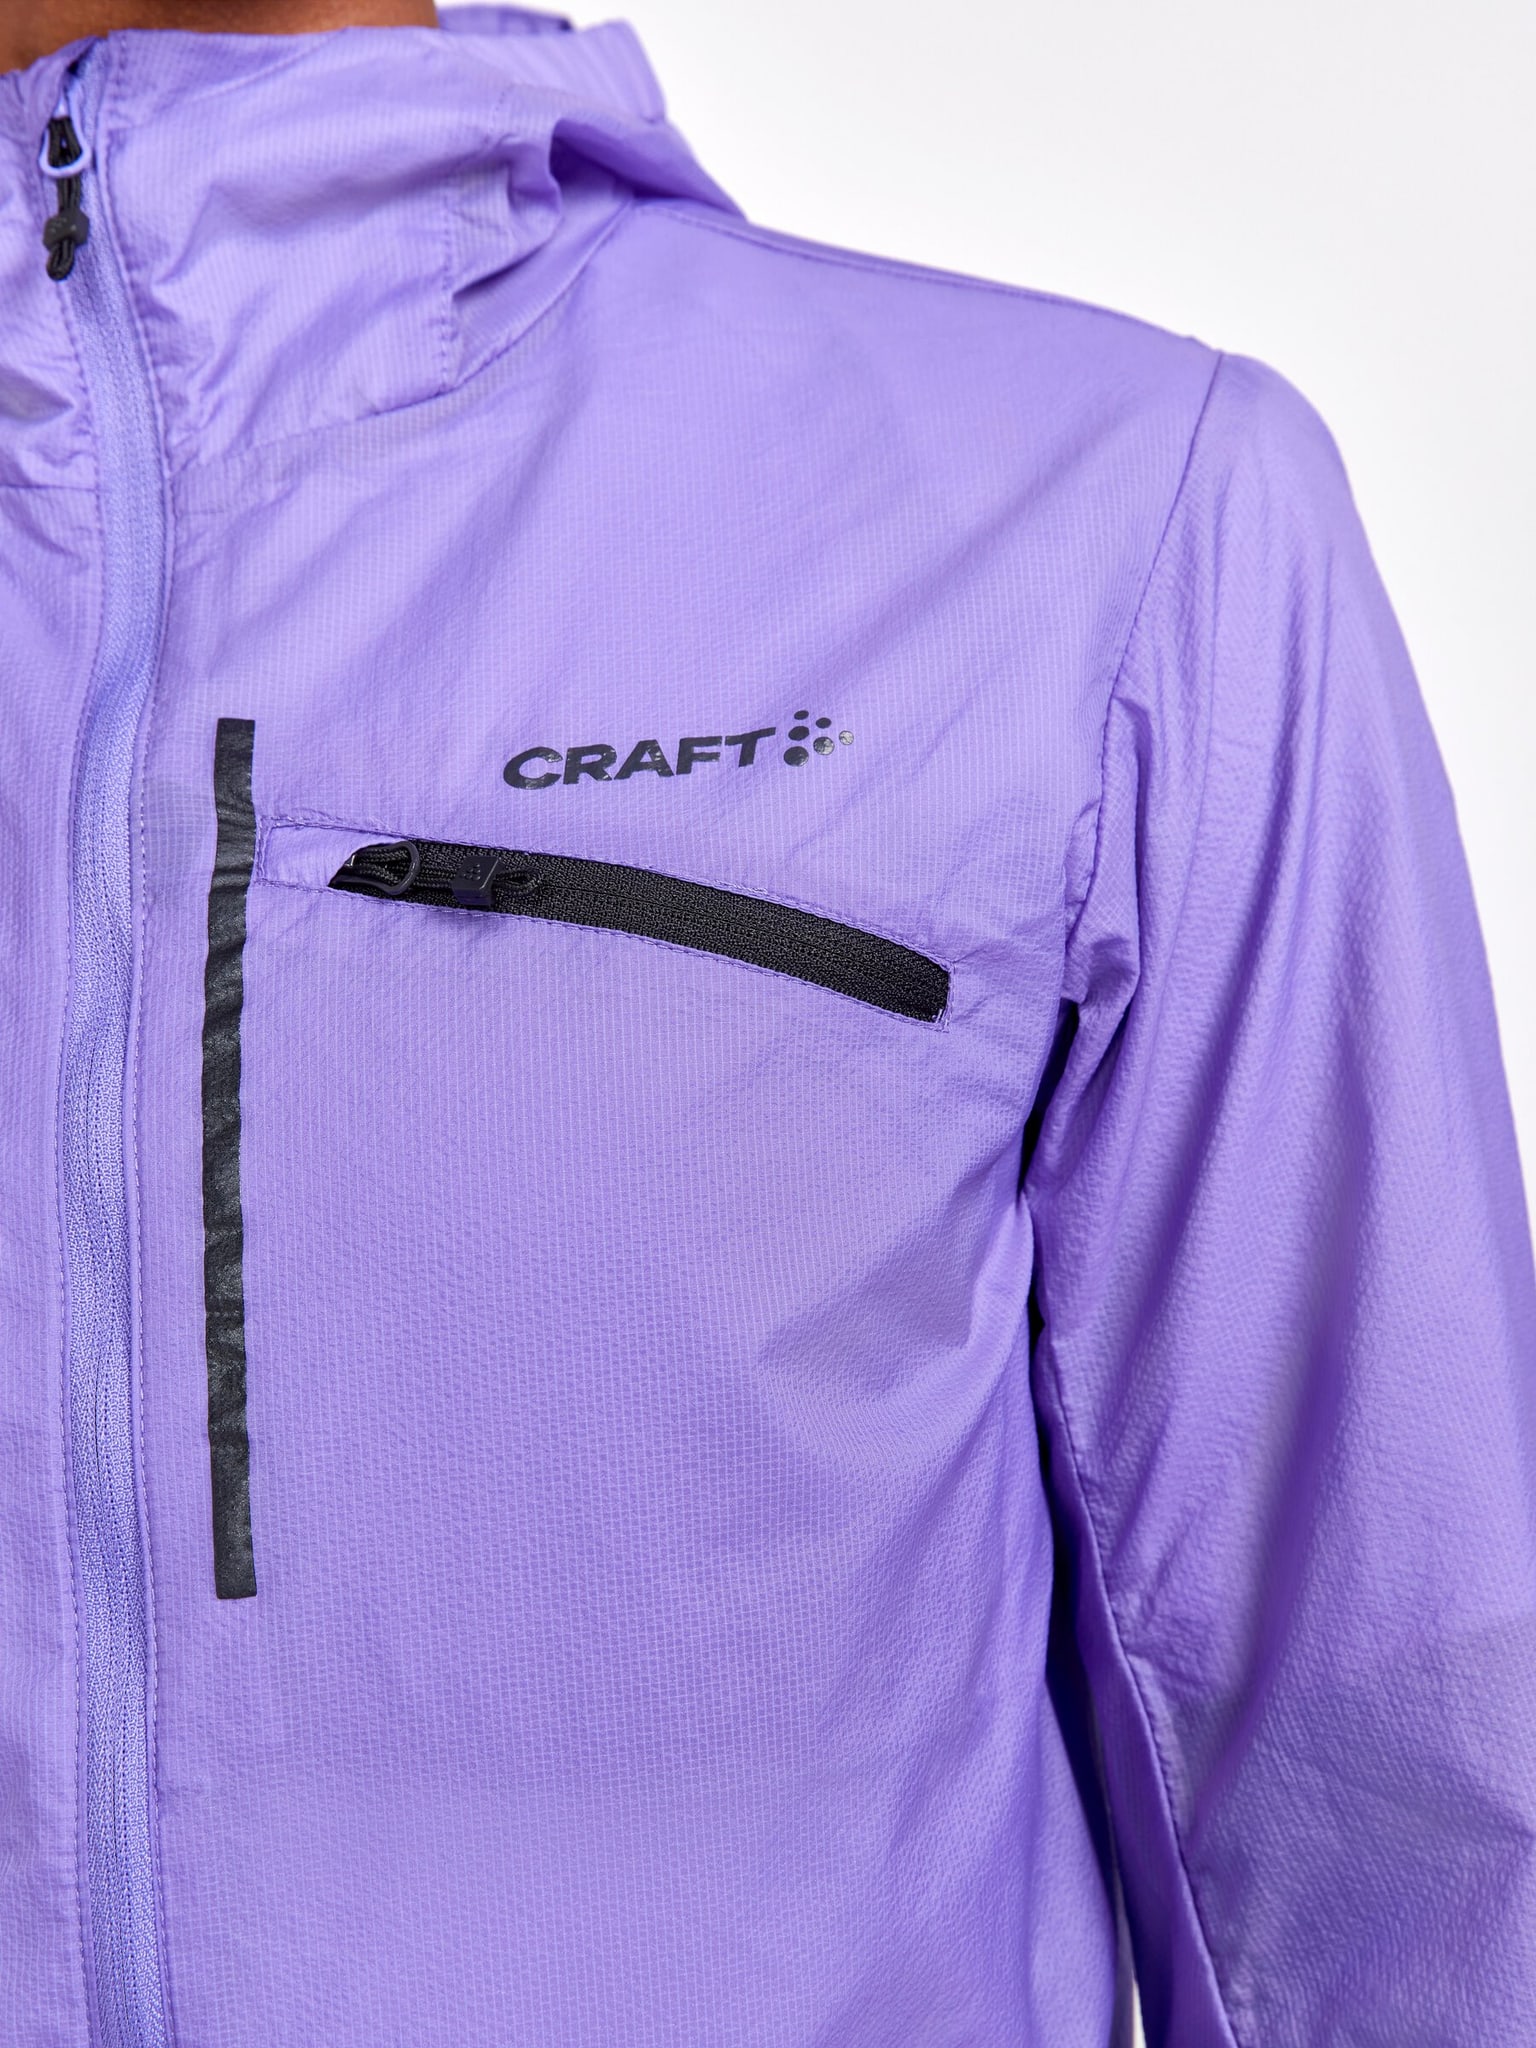 Craft Craft ADV OFFROAD WIND JACKET Bikejacke violet 6